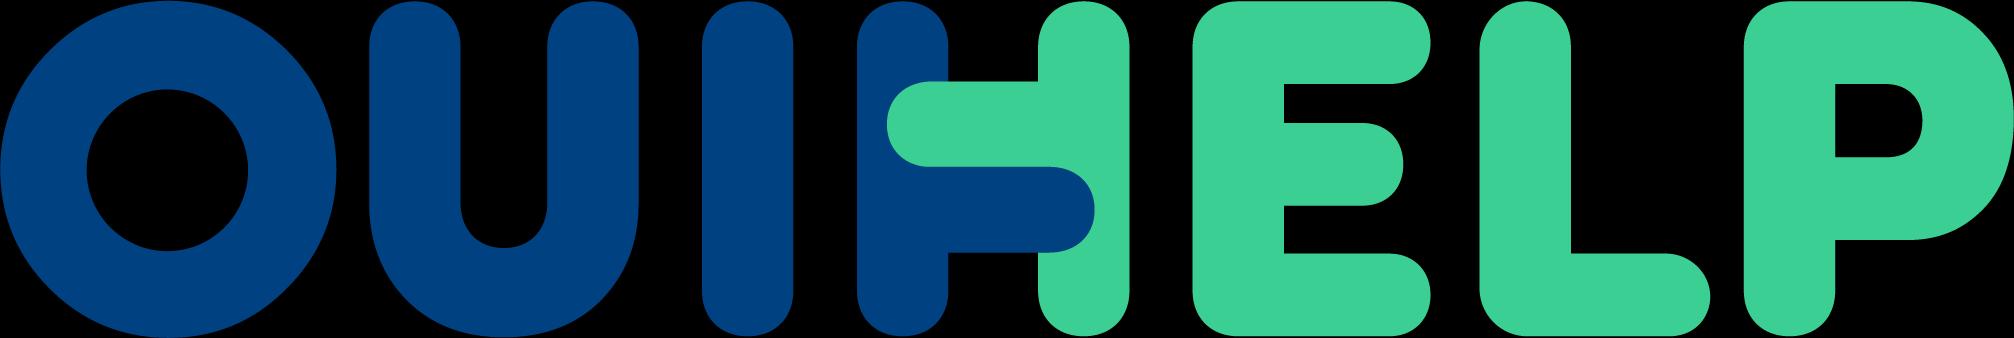 Ouihelp_logo